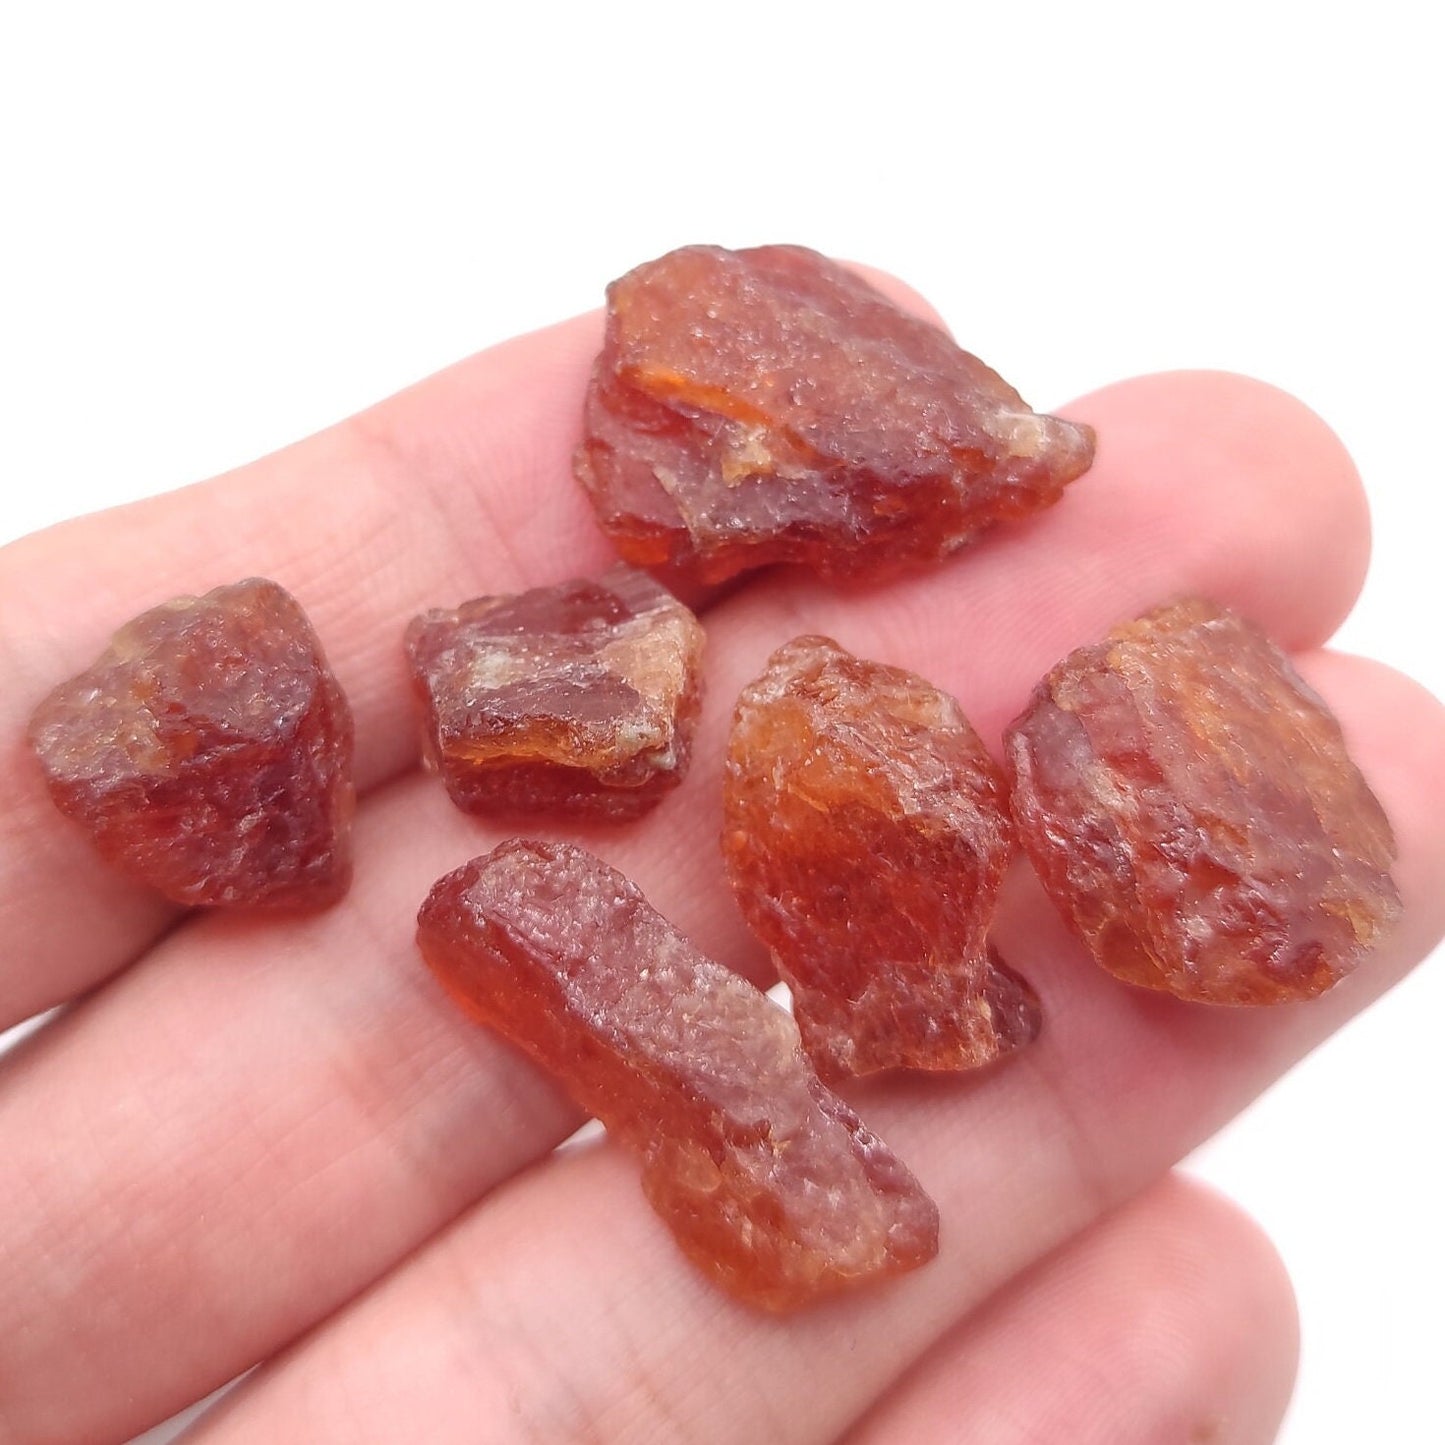 98ct 6pcs Hessonite Garnet Lot - Natural Hessonite Garnet - Loose Gemstones - Rough Gems - Raw Garnet Crystals from Pakistan